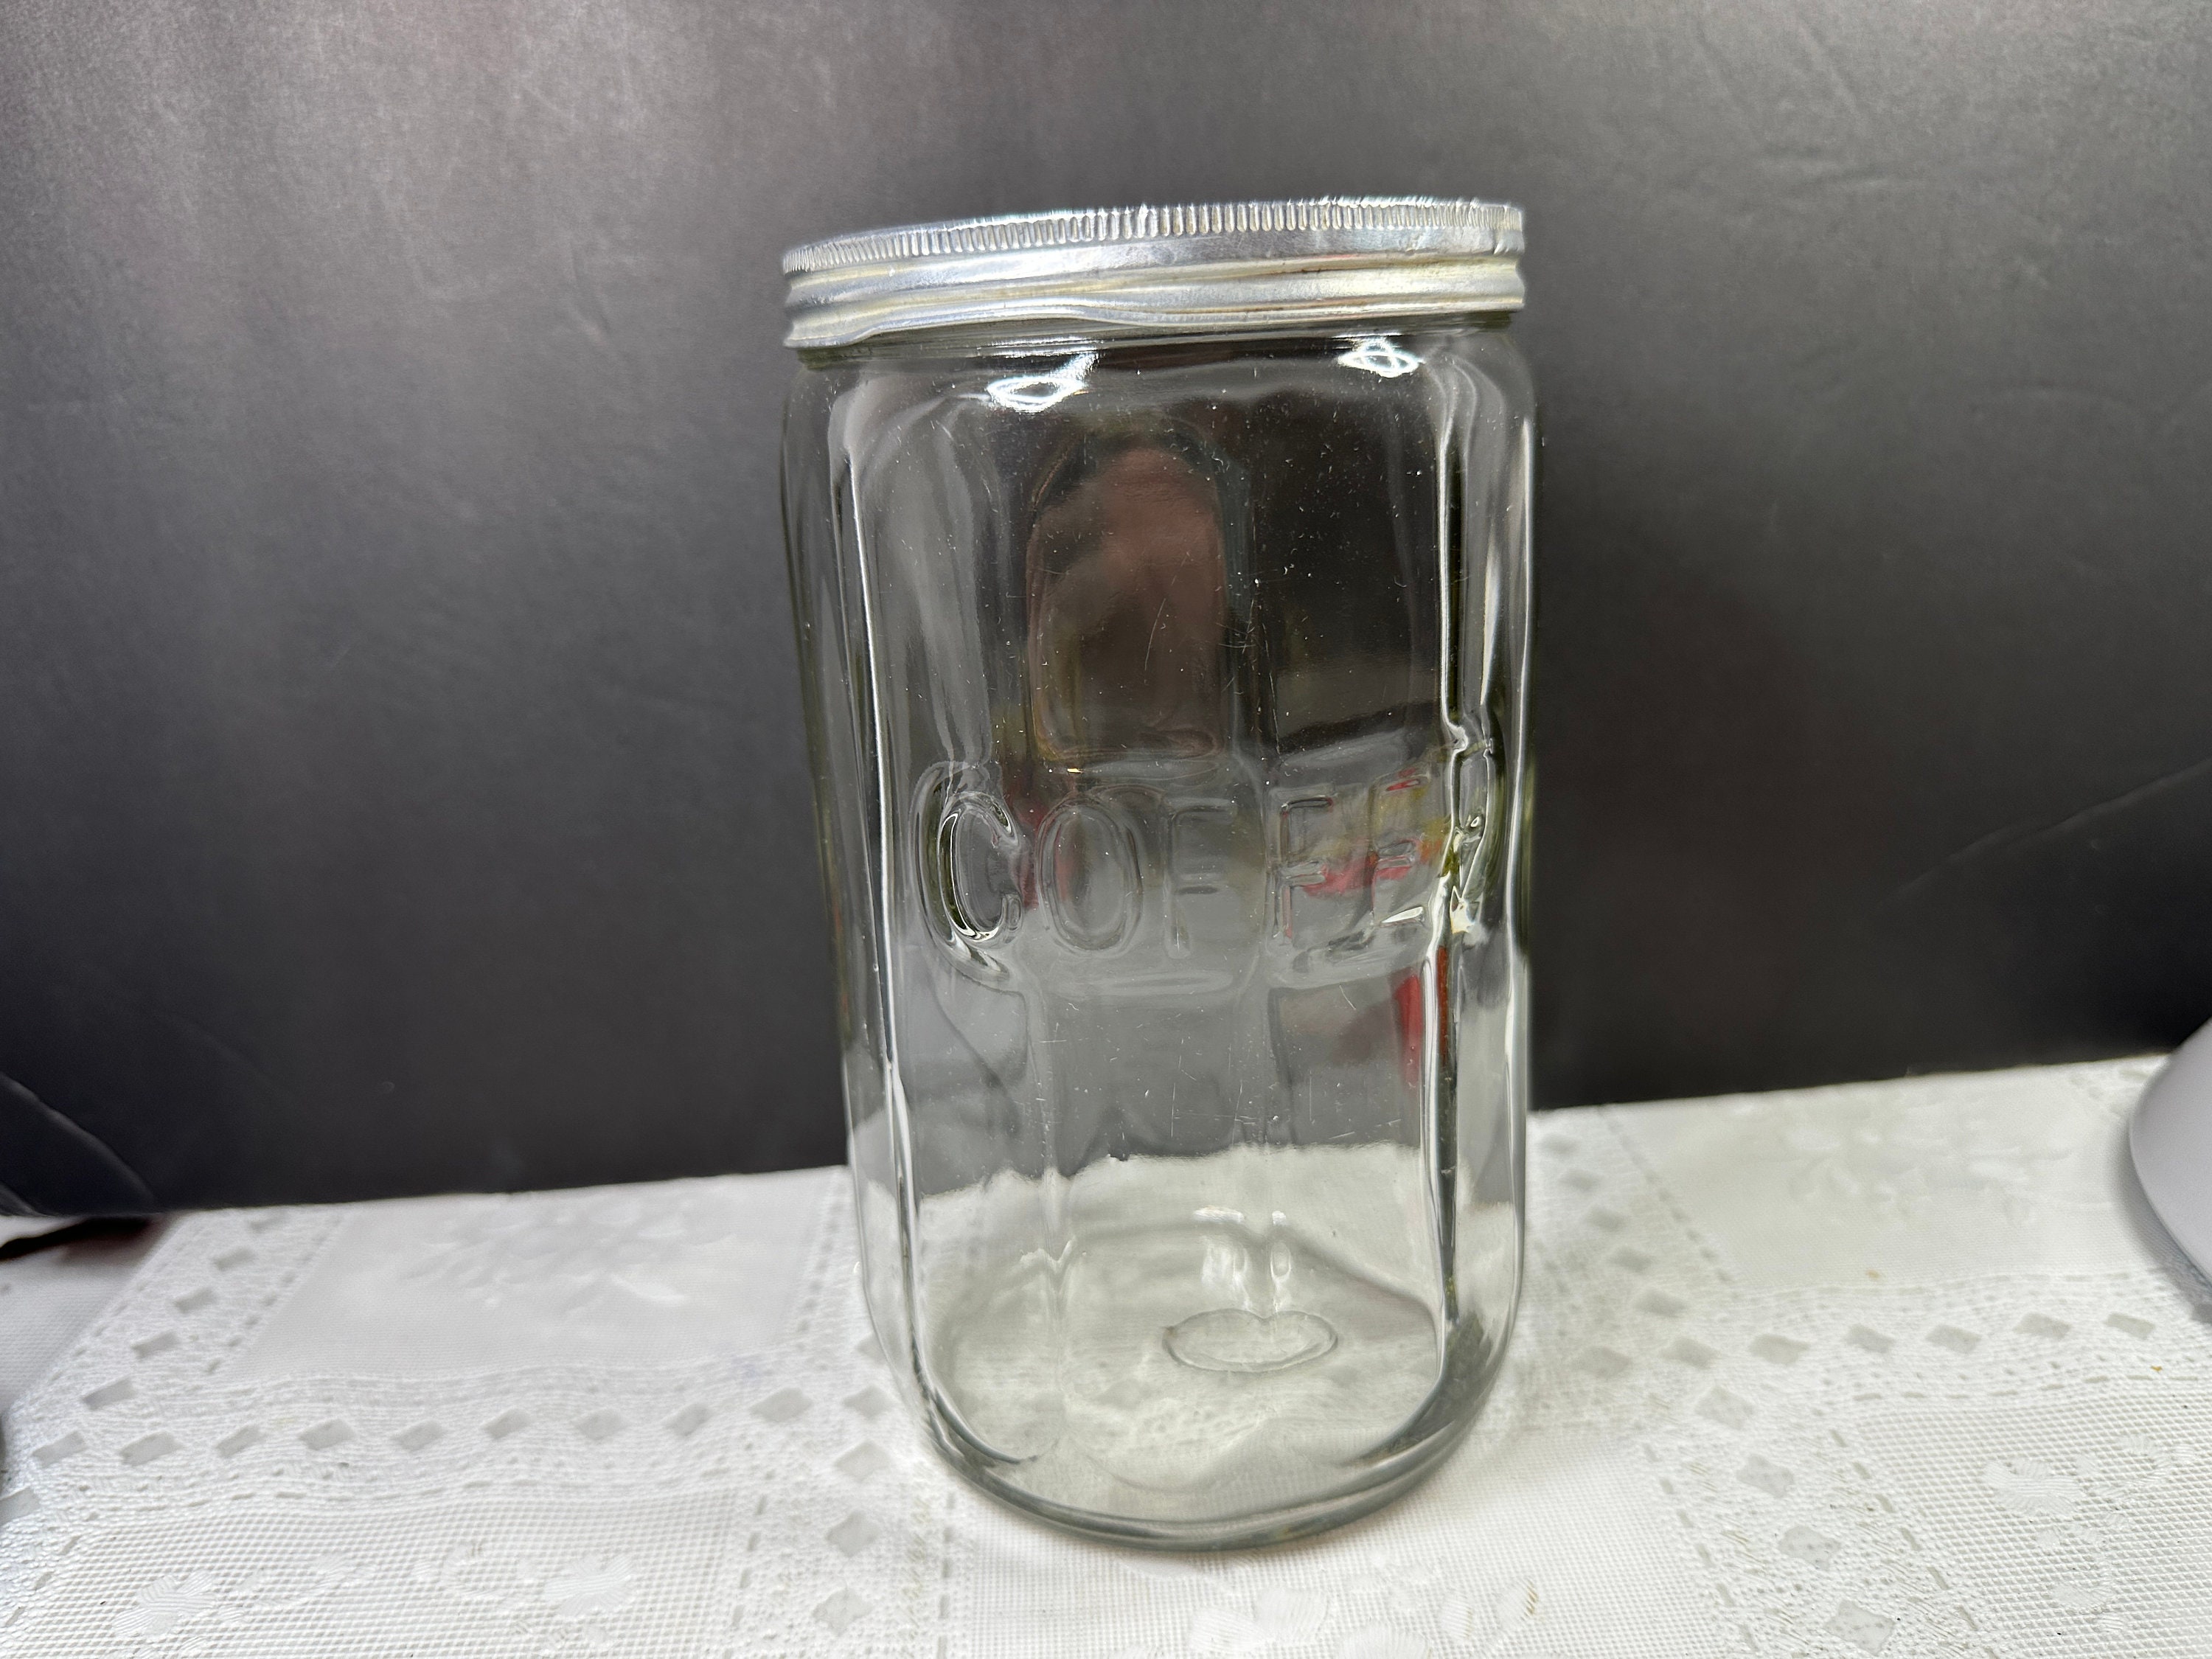 Value Pack - 48 pcs 6 oz Beveled Glass Jar with Lid (190 ml)